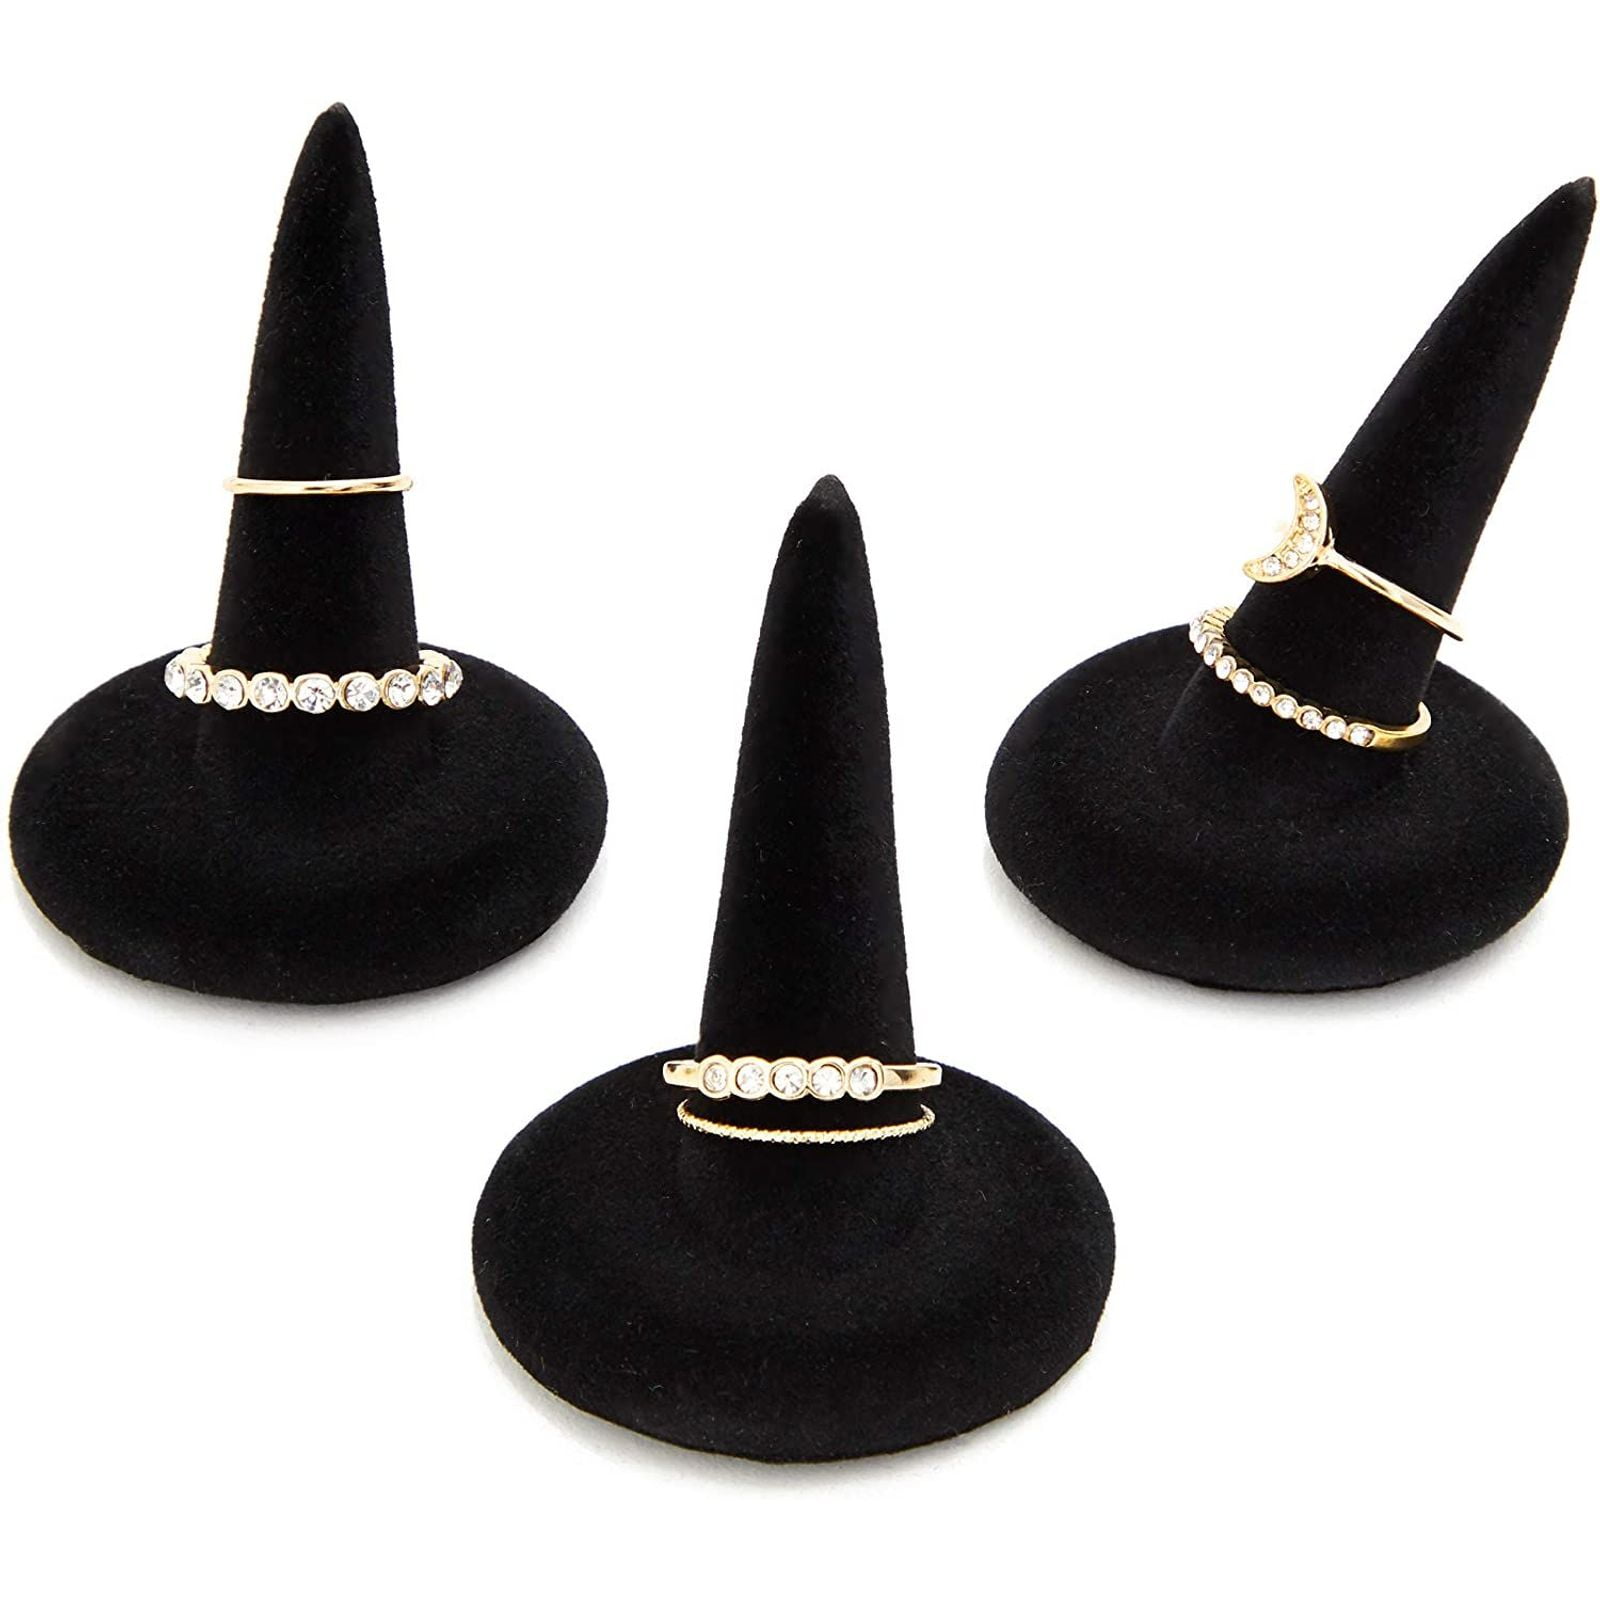 Fashion Black Velvet 1/2/3 Finger Ring Stand Jewelry Holder Display Showcase RHC 